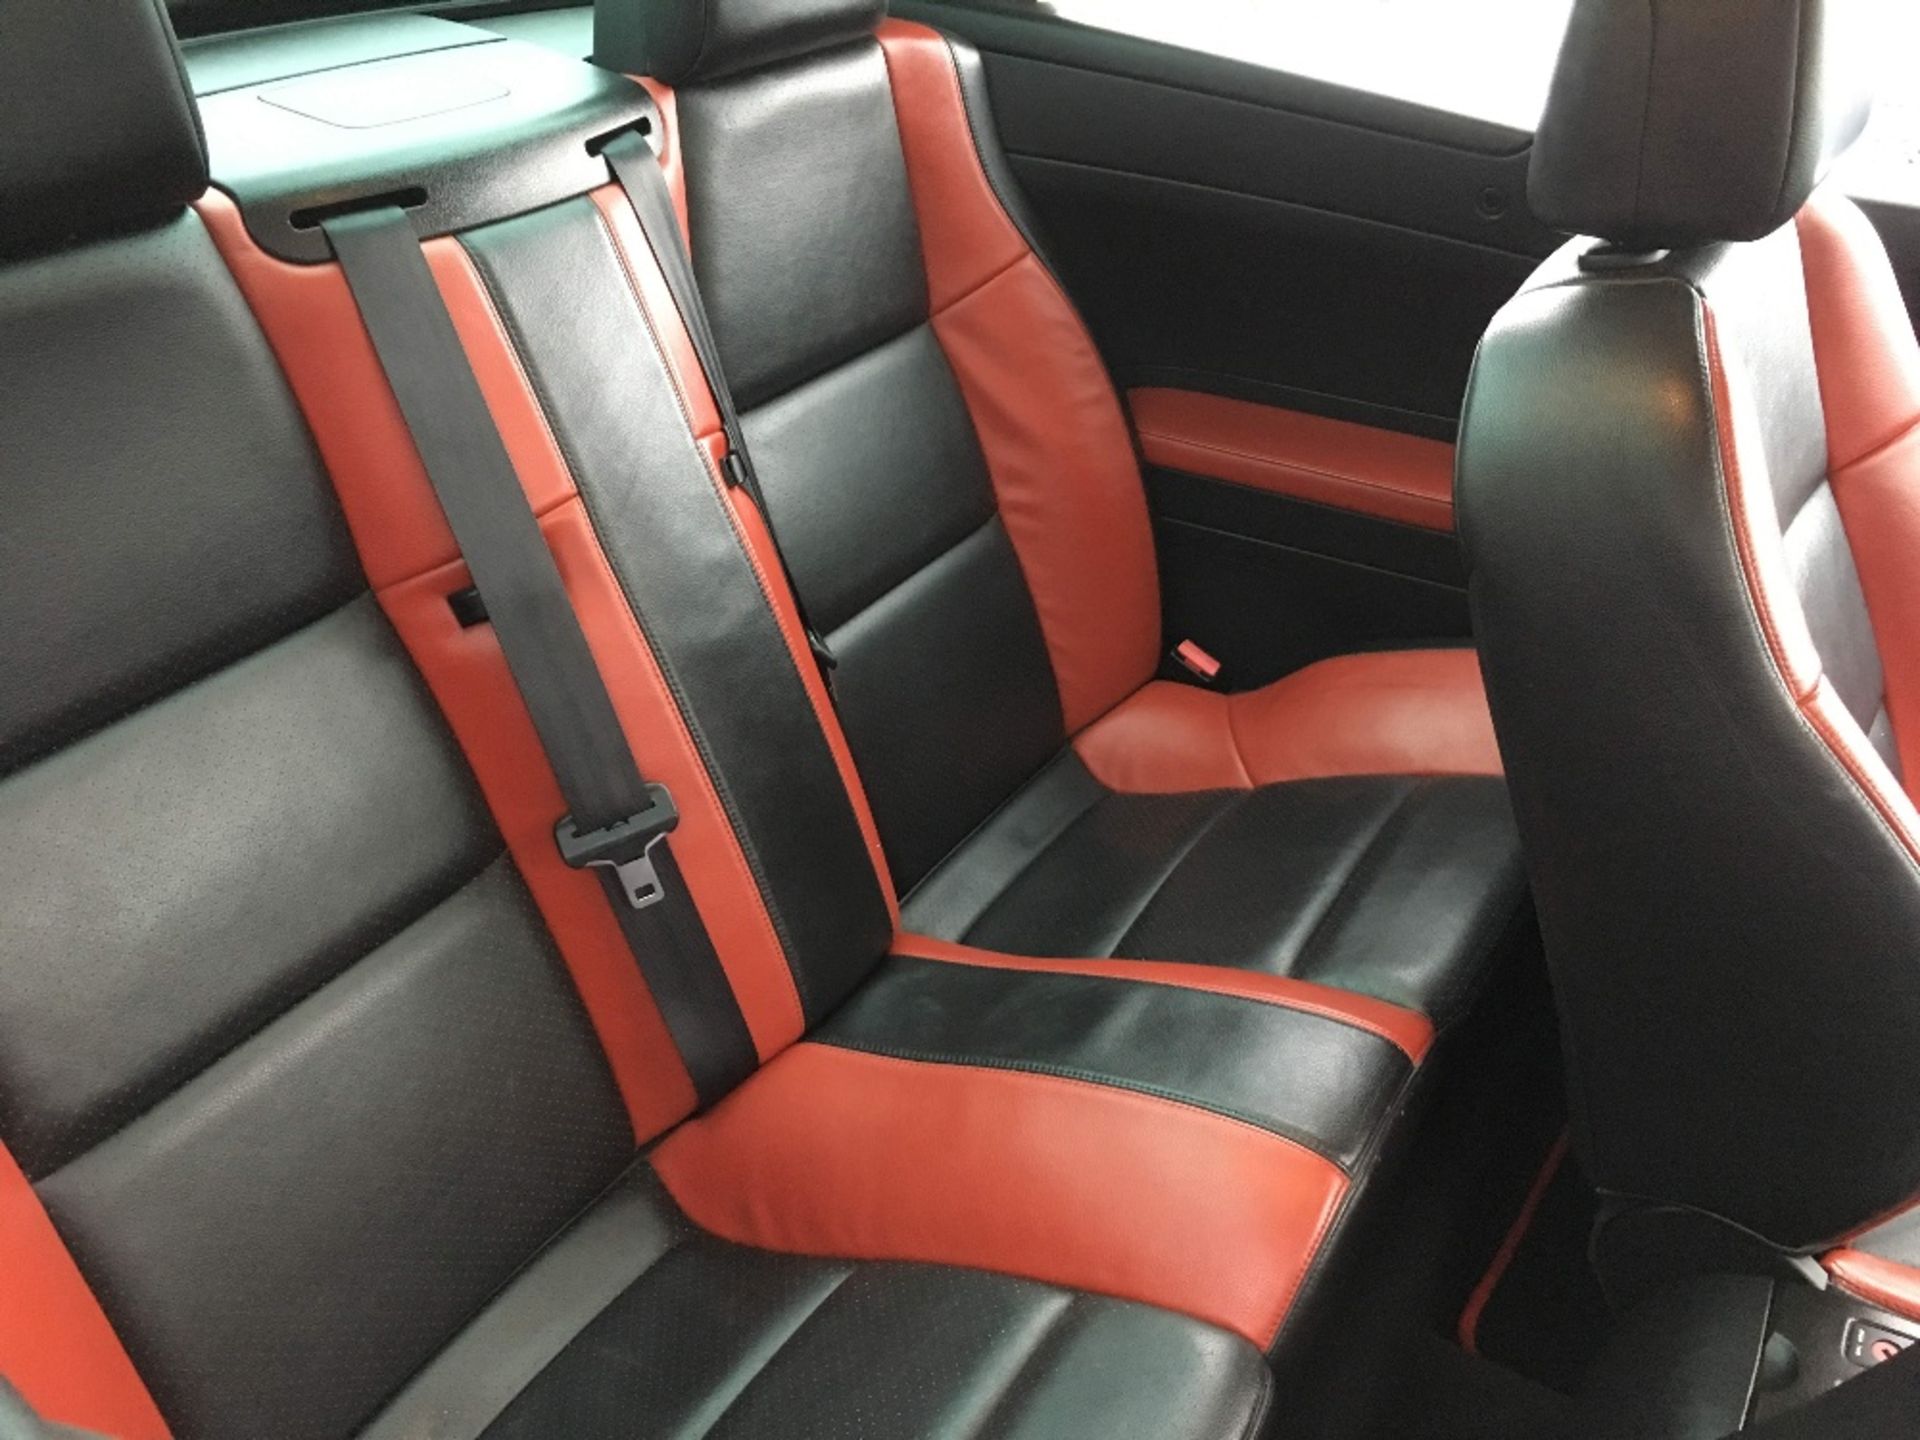 Peugeot 307 Allure CC Convertible - leather seats - 2 keysRegistration: MV08 FLGMileage: - Image 6 of 6